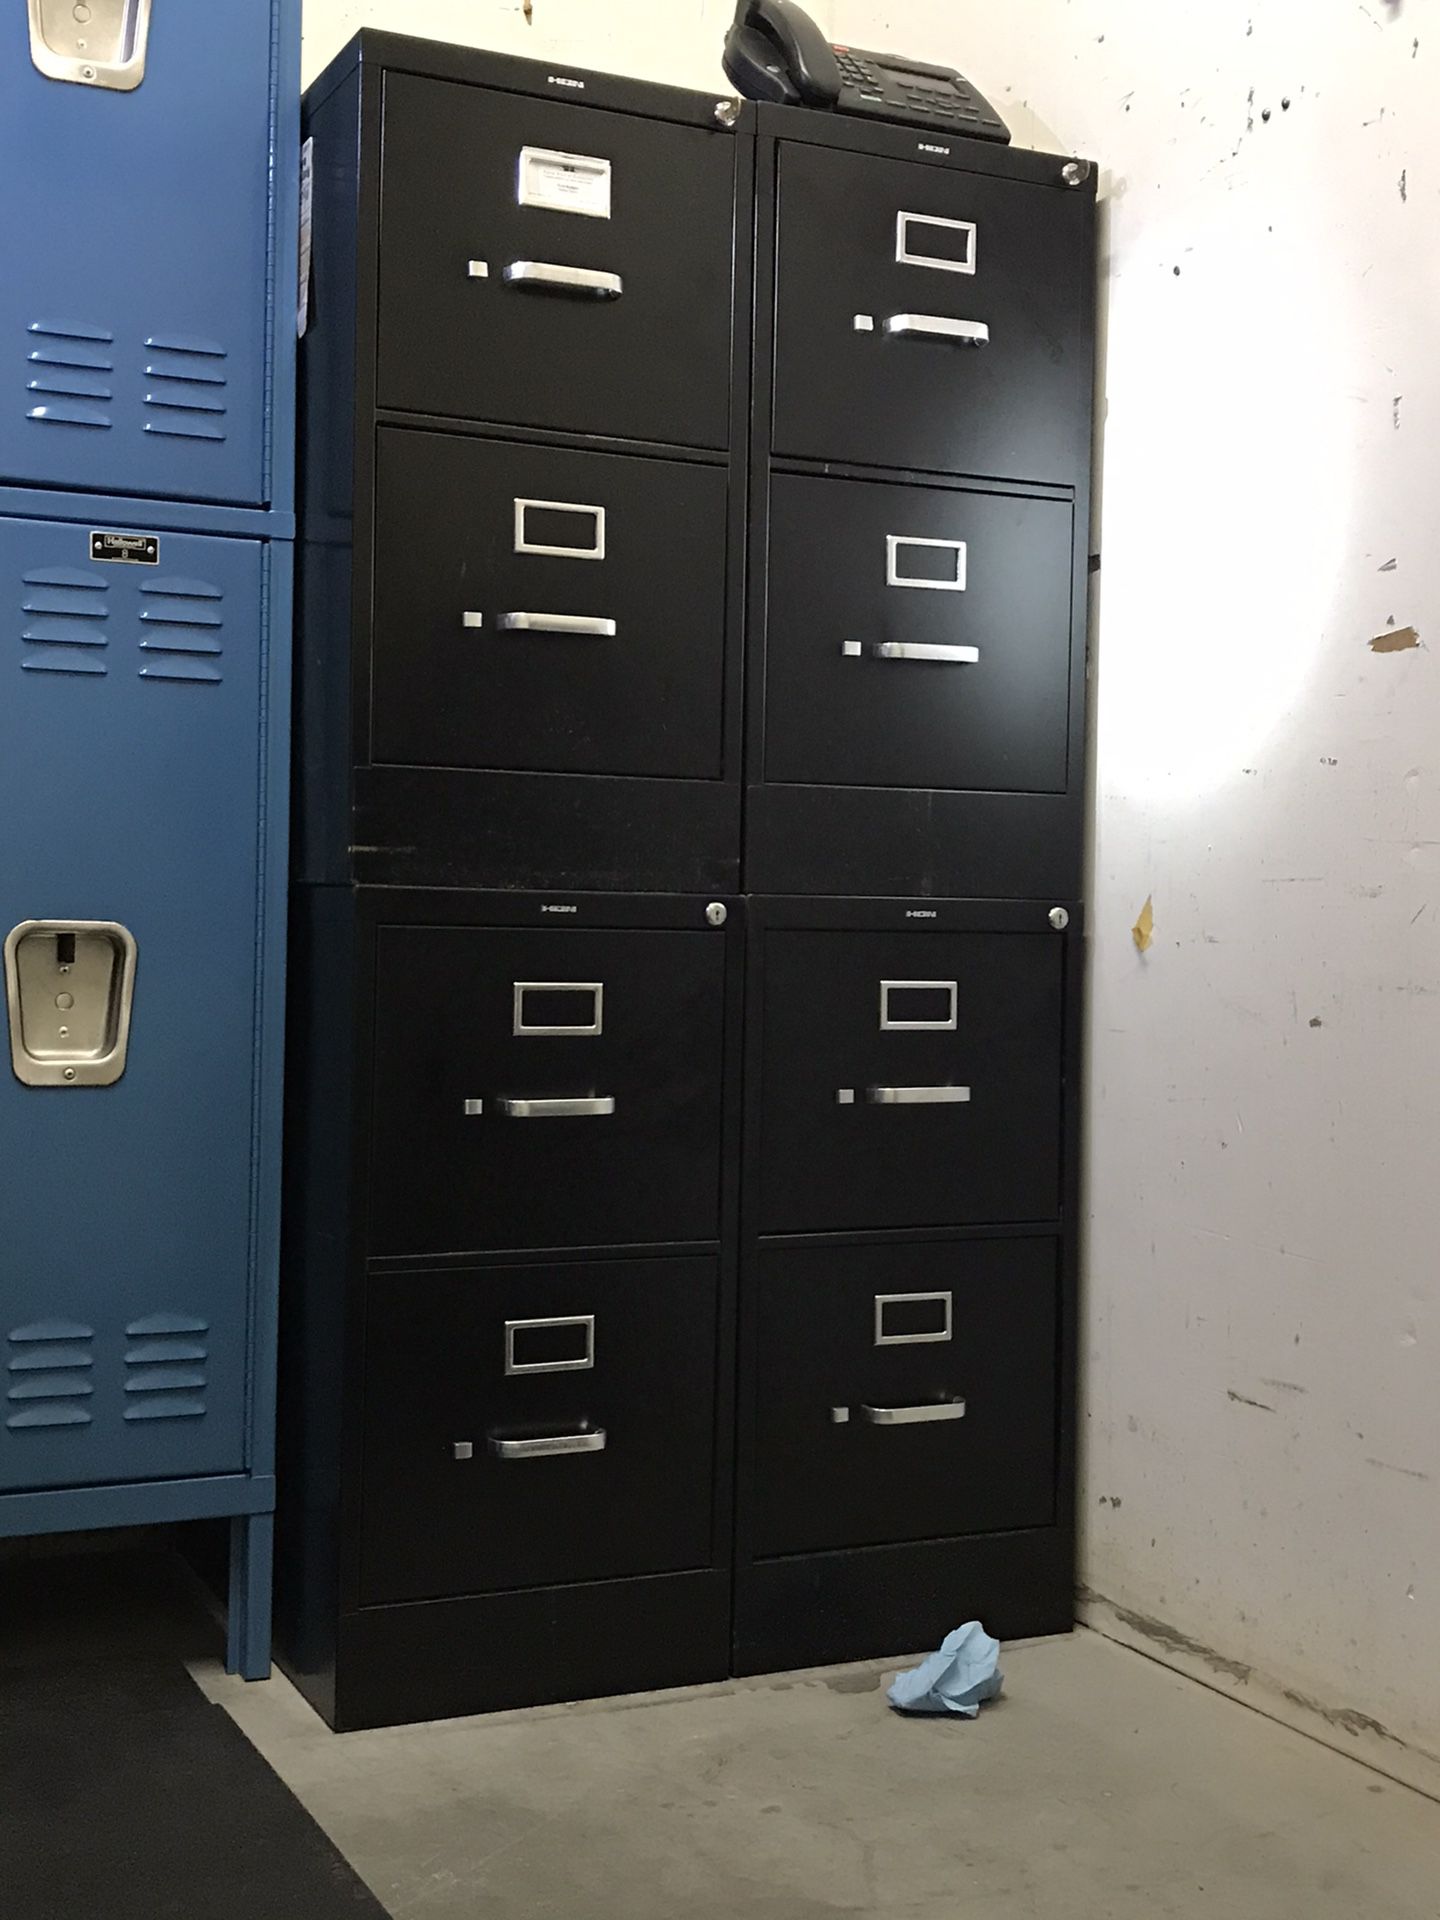 Standard file cabinets